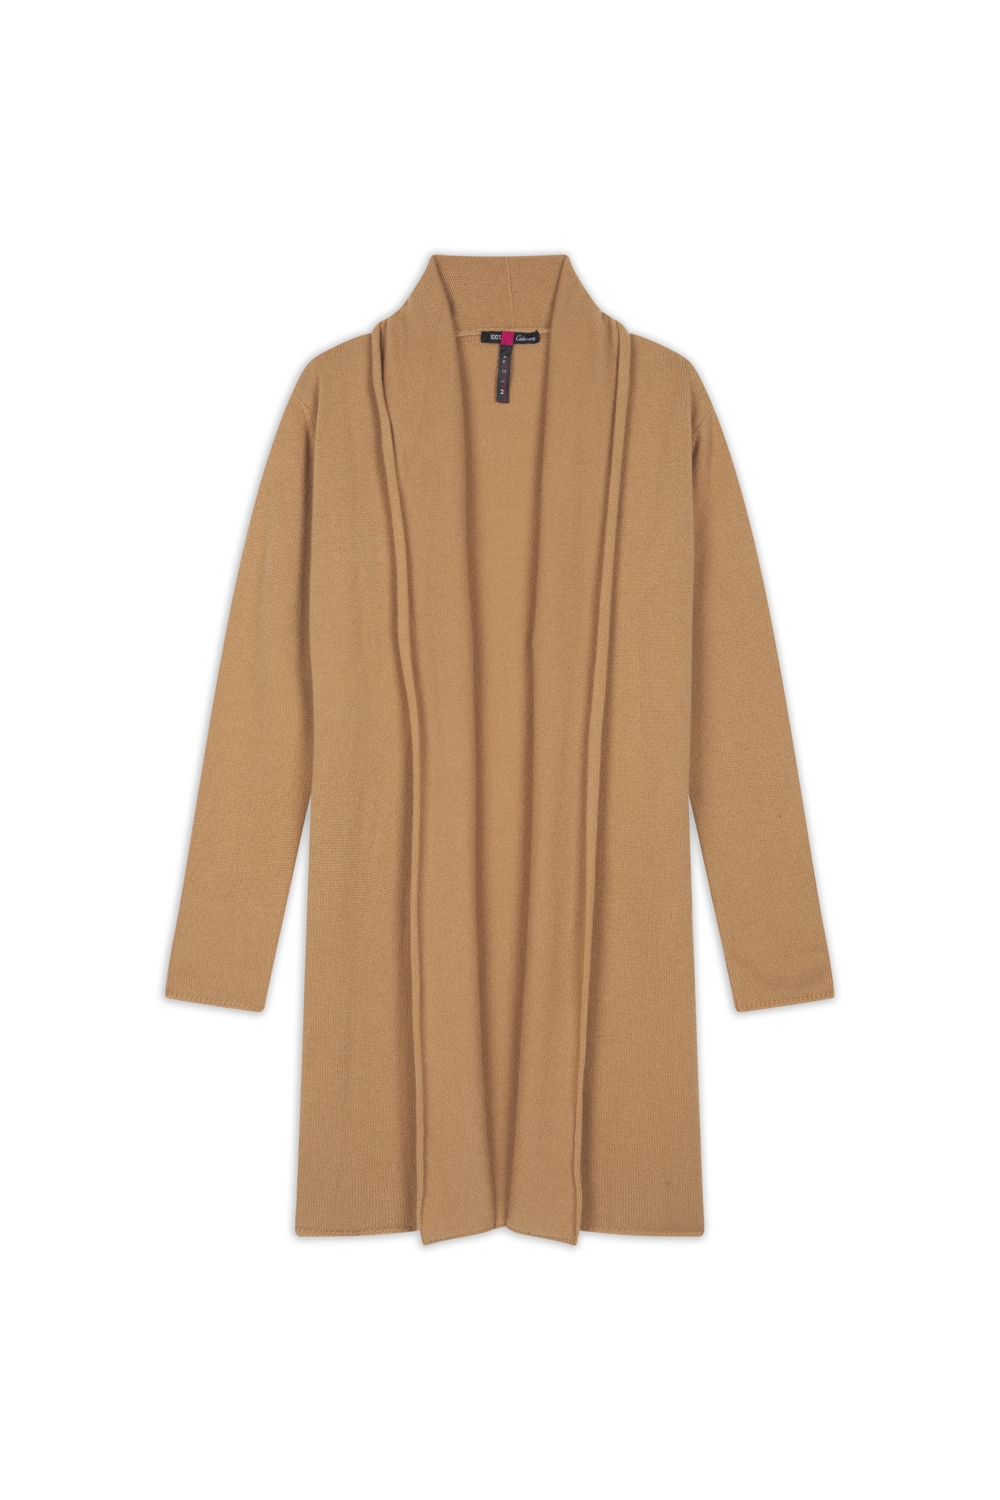 Cachemire robe manteau femme perla camel 3xl